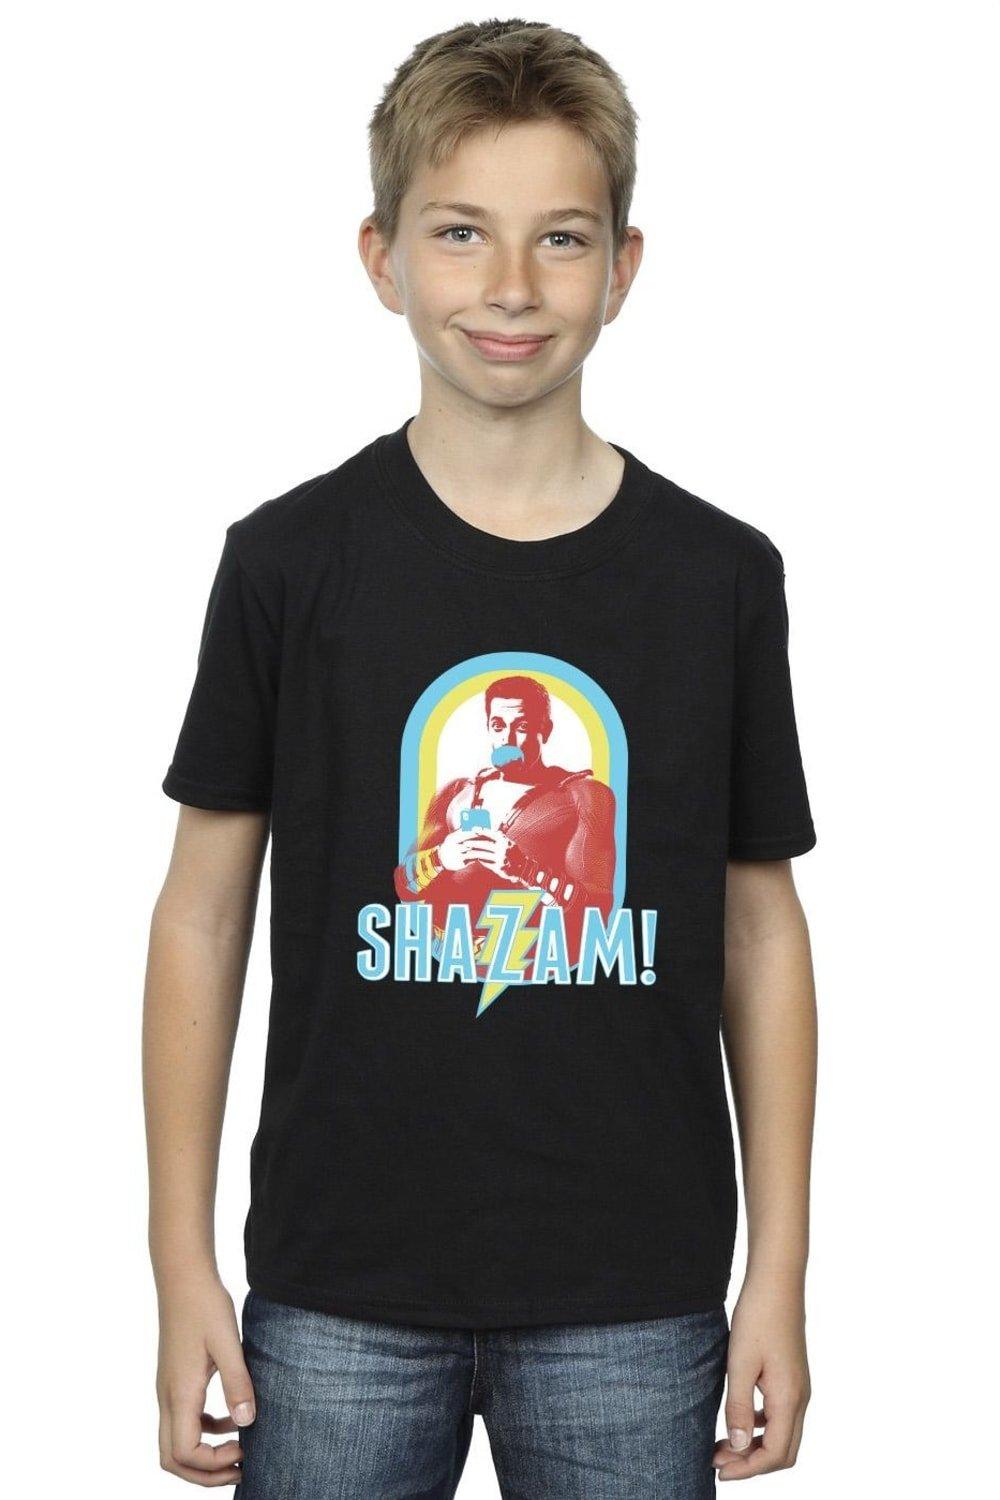 Shazam Buble Gum Frame T-Shirt